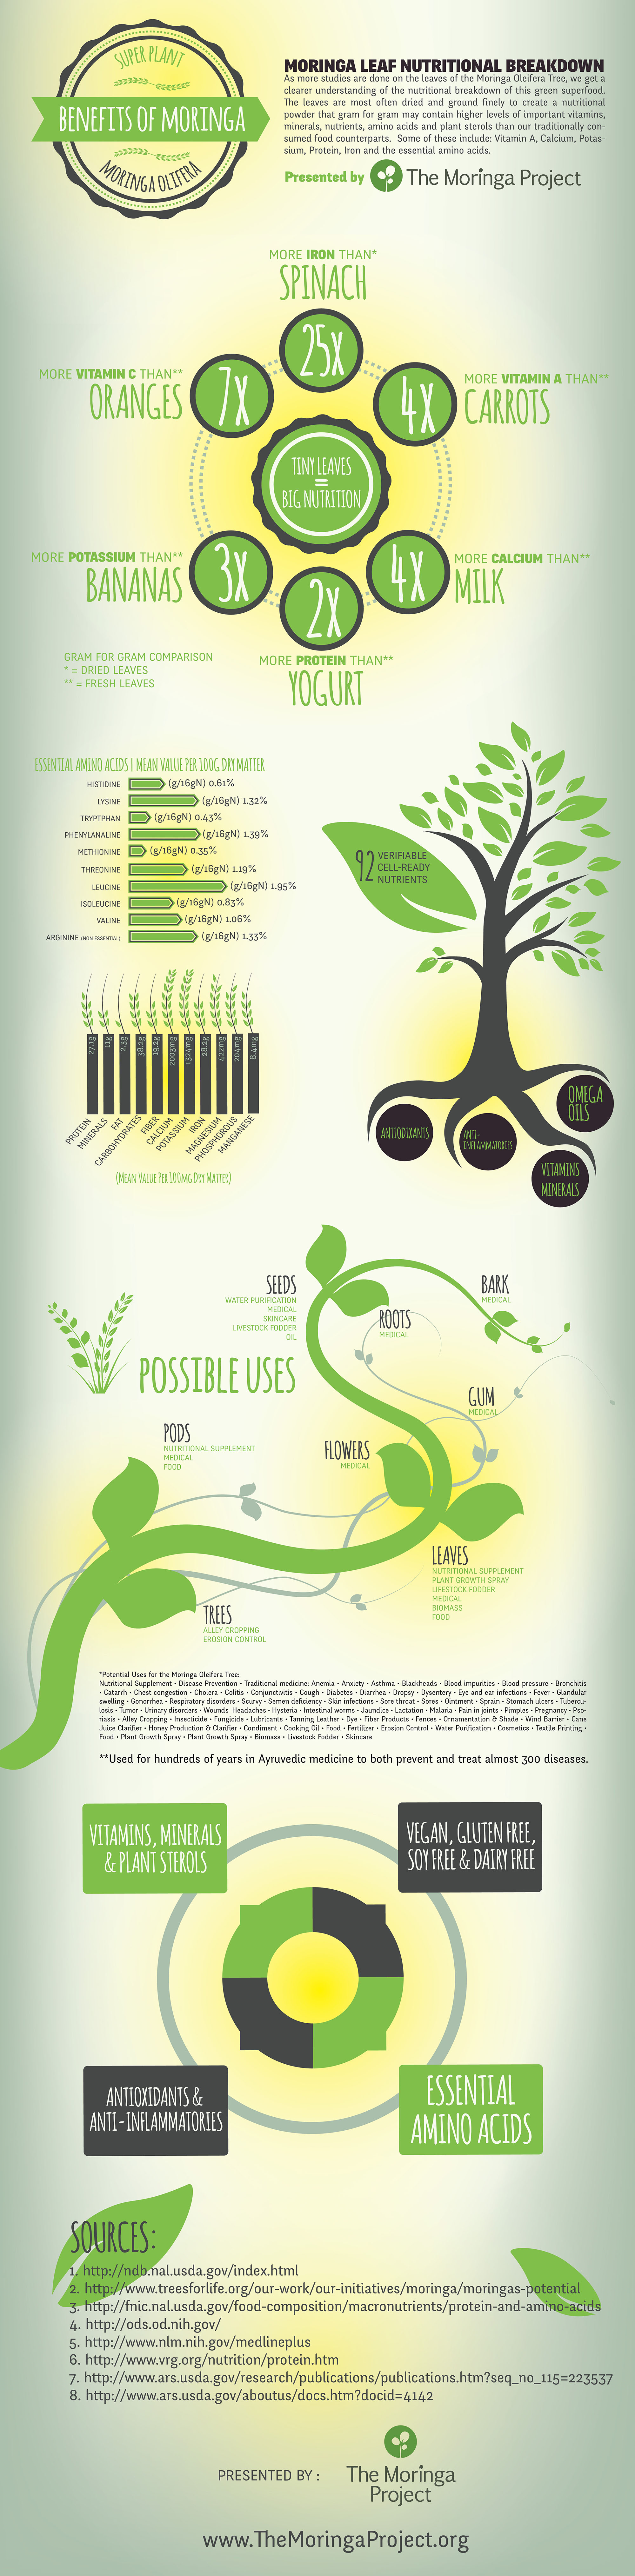 Moringa Benefits Infographic